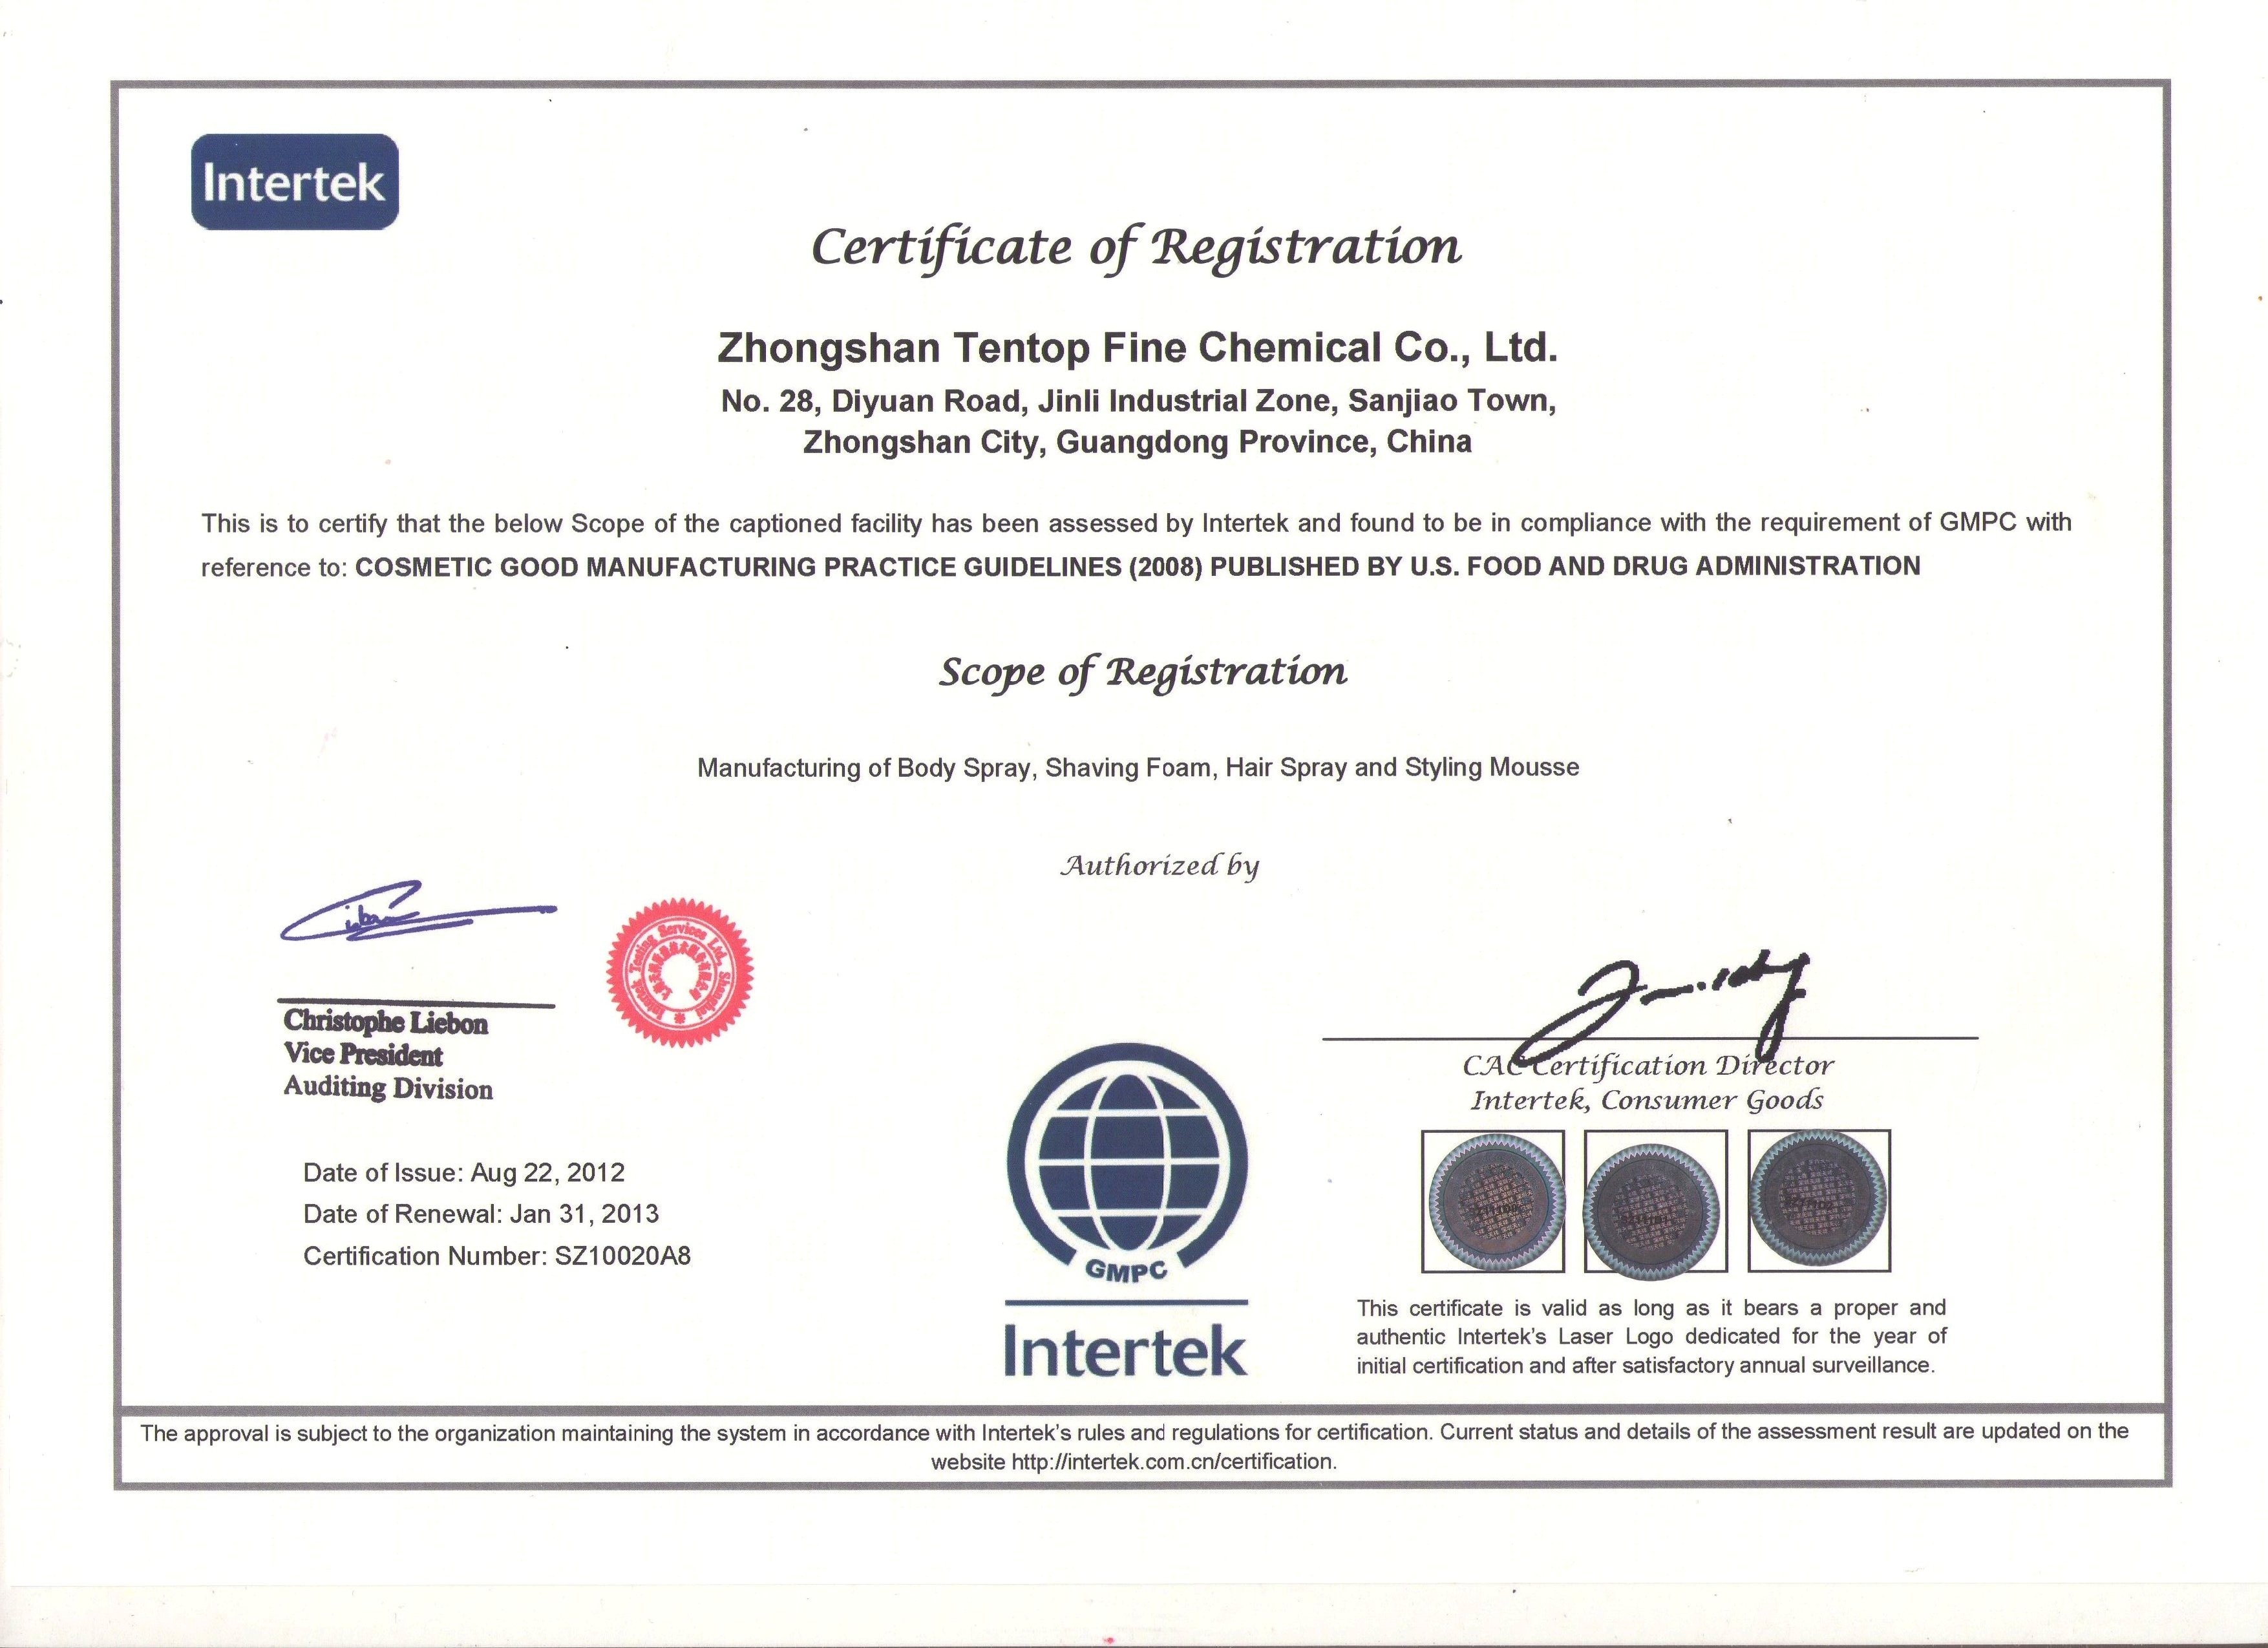 Zhongshan Tentop Fine Chemical Co., Ltd Certifications